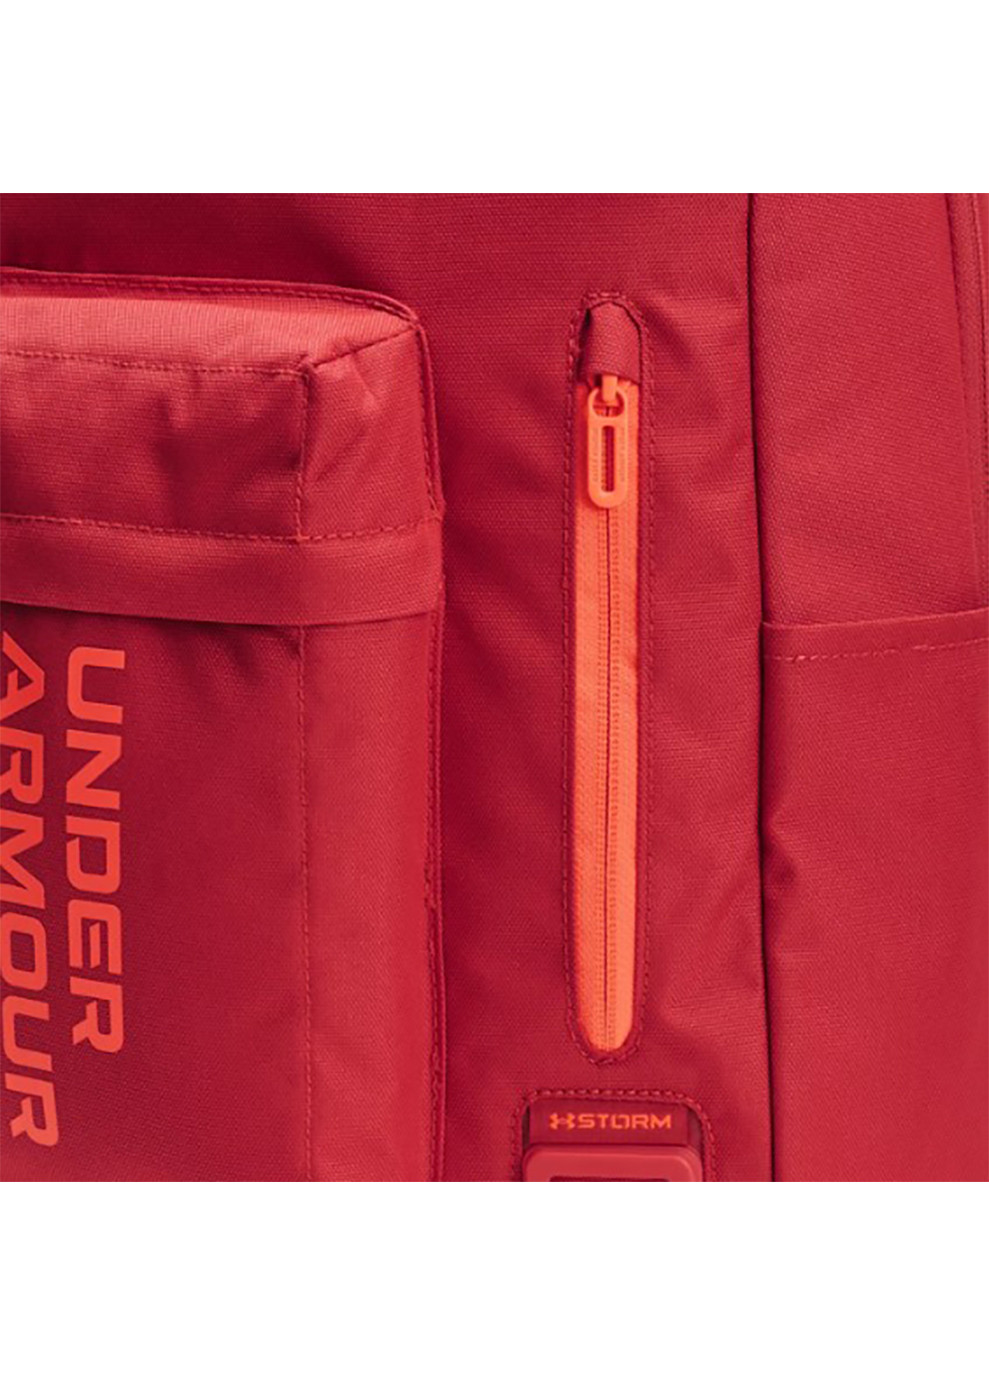 Рюкзак UA Halftime Backpack Красный Уни Under Armour (260645934)